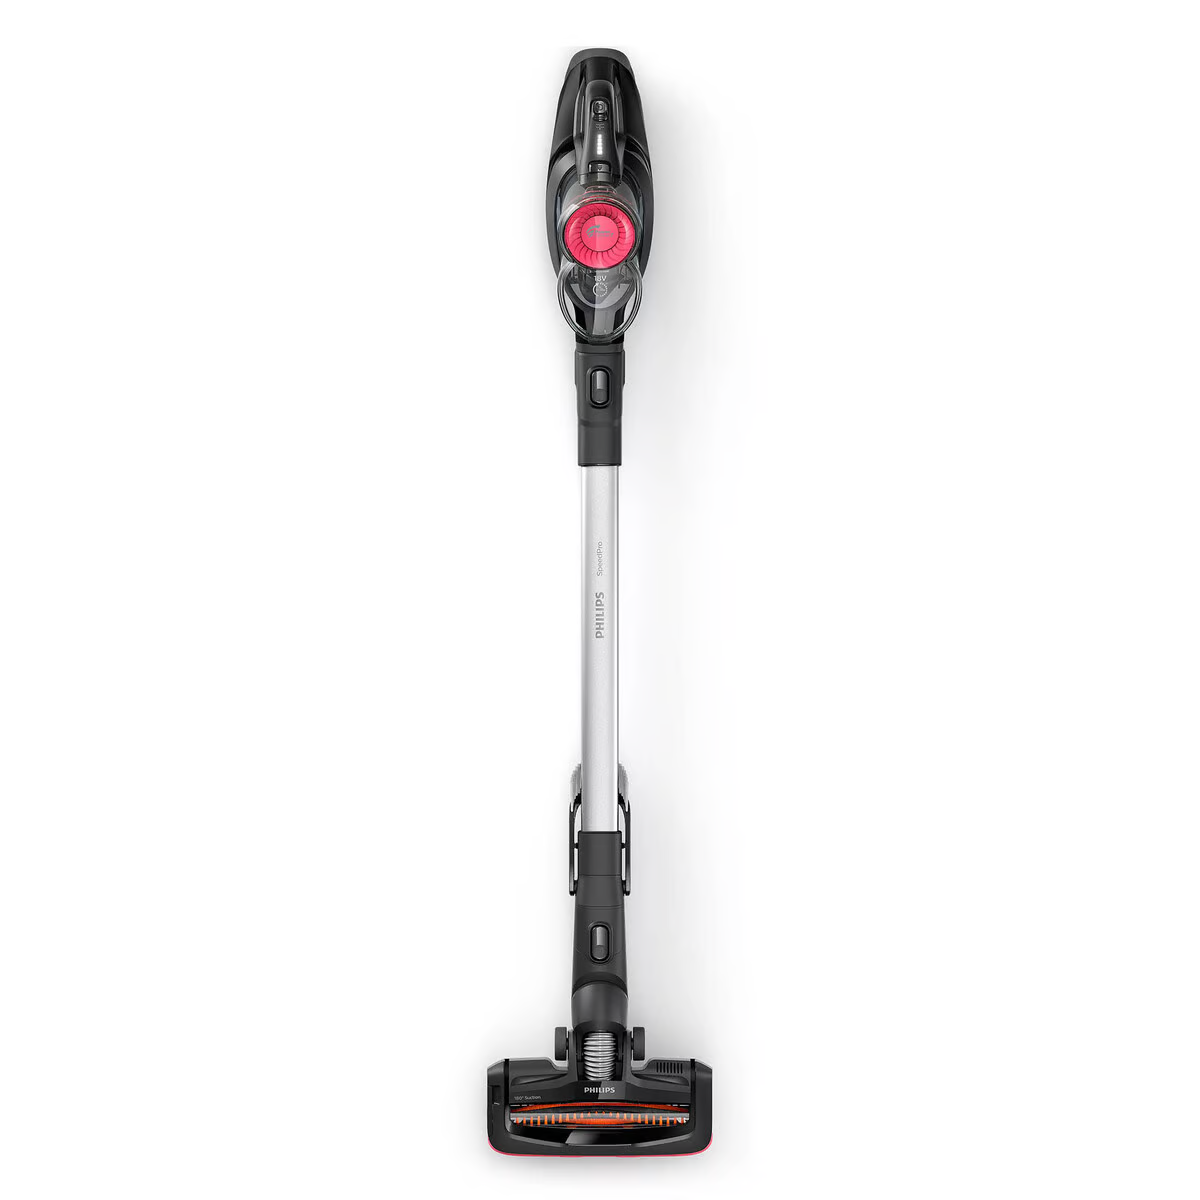 PHILIPS Cordless Stick Vacuum Cleaner,SpeedPro,Black,FC6722/61